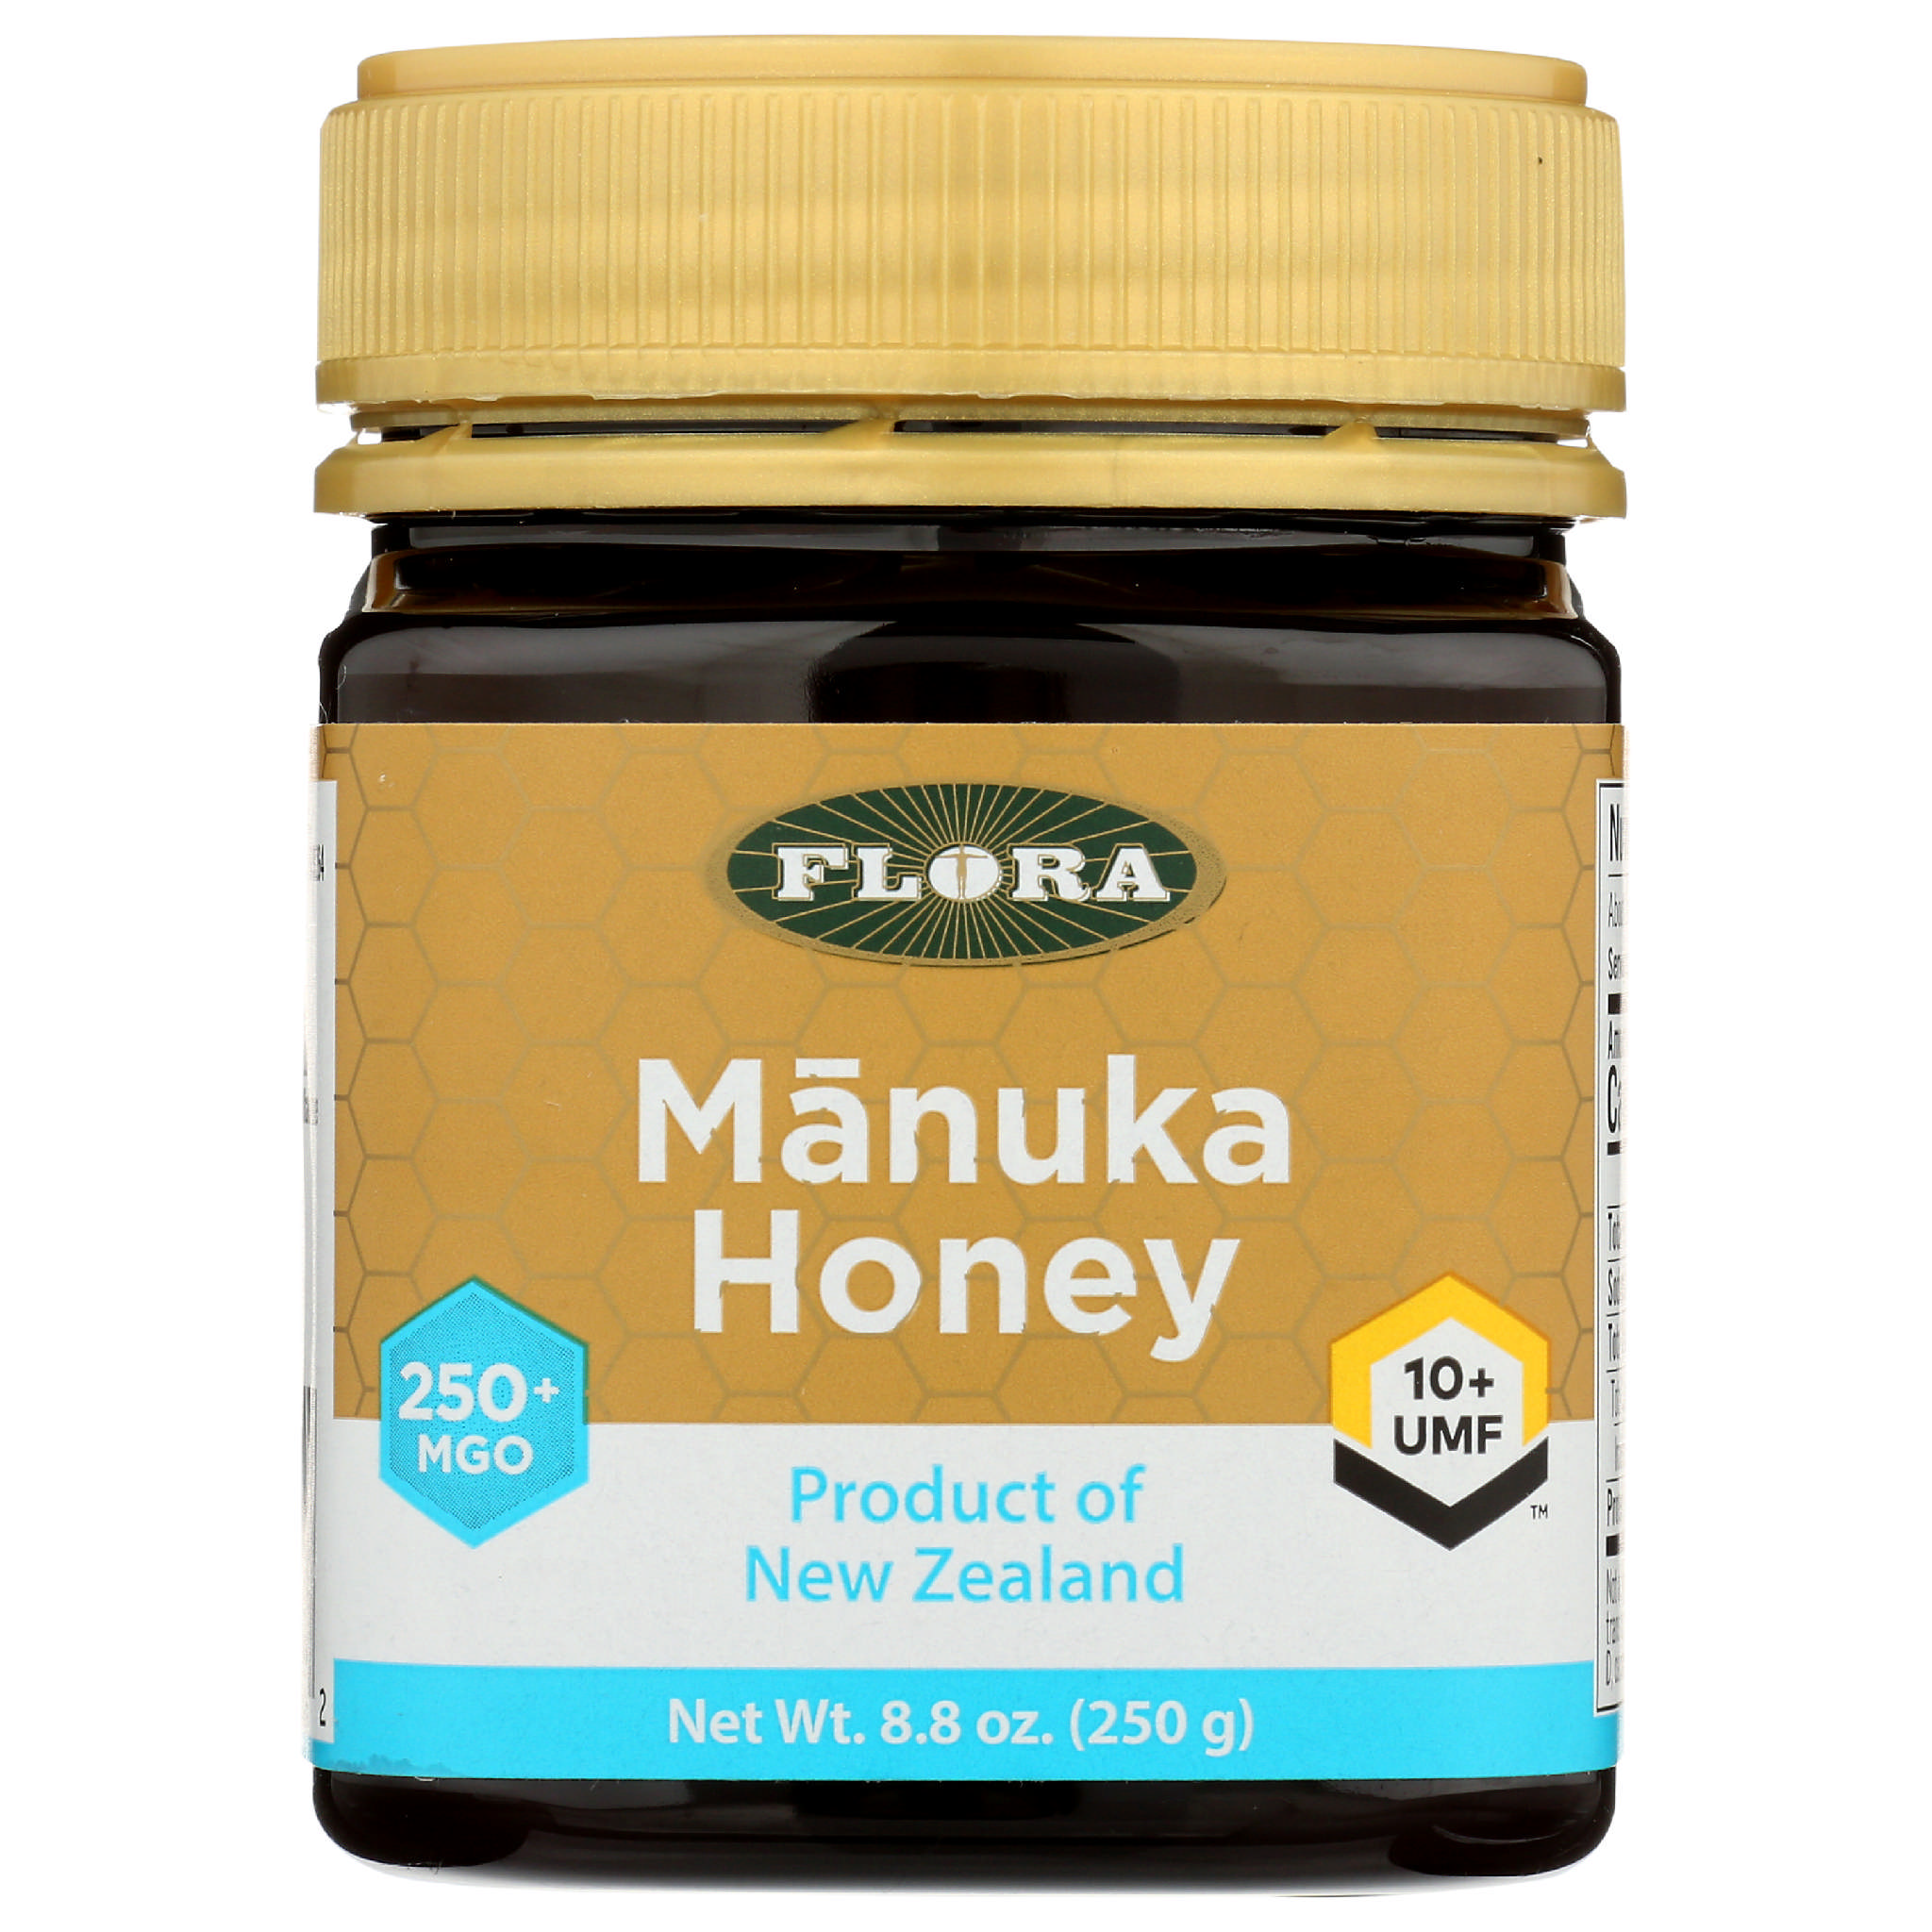 Flora - Honey Manuka Mgo 250+